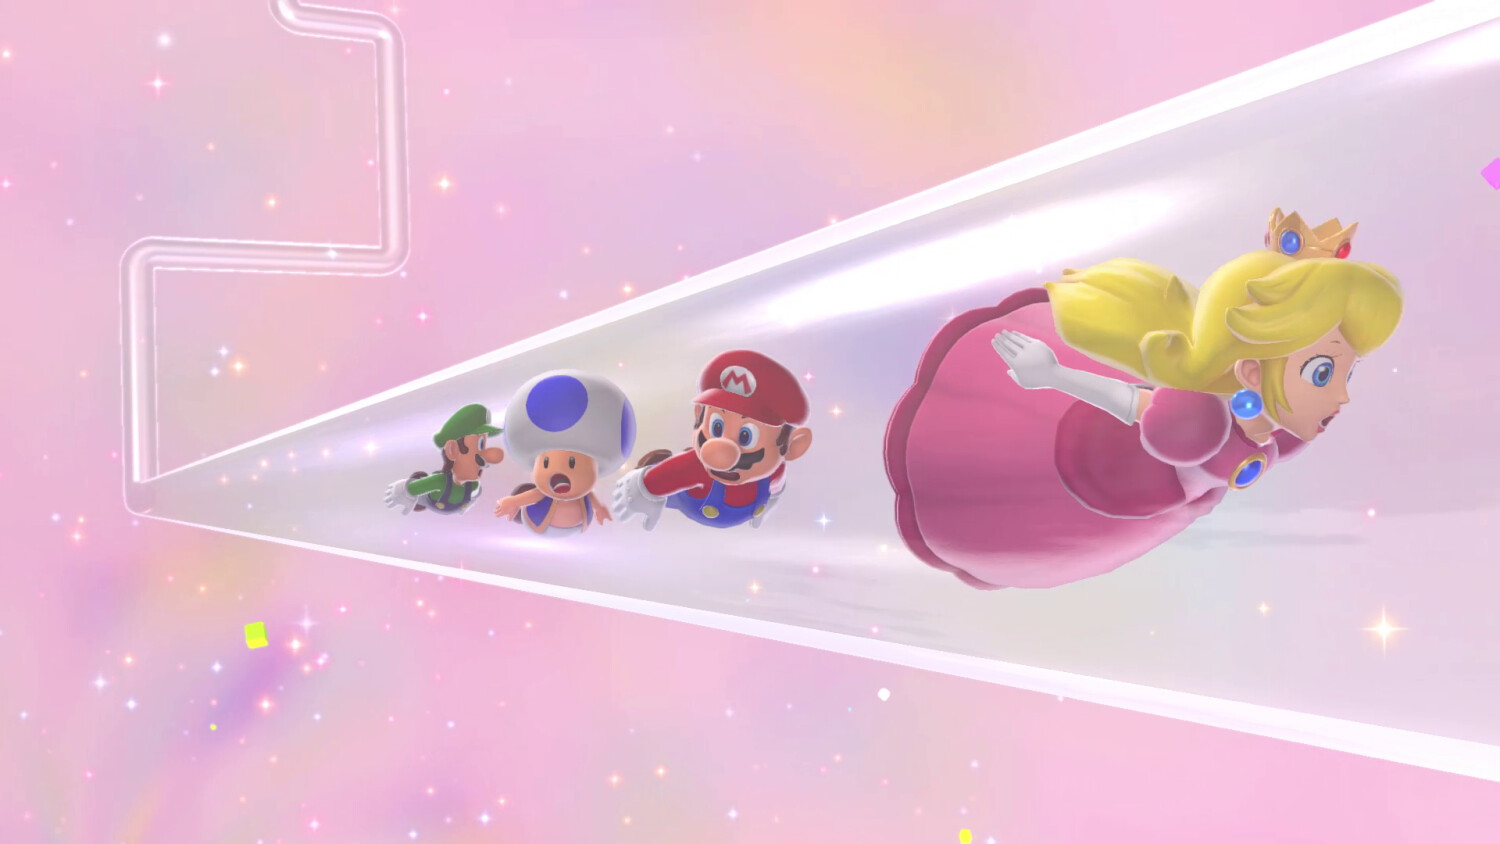 Nintendo Switch Super Mario 3D World+Bowser´s Fury Multicolor